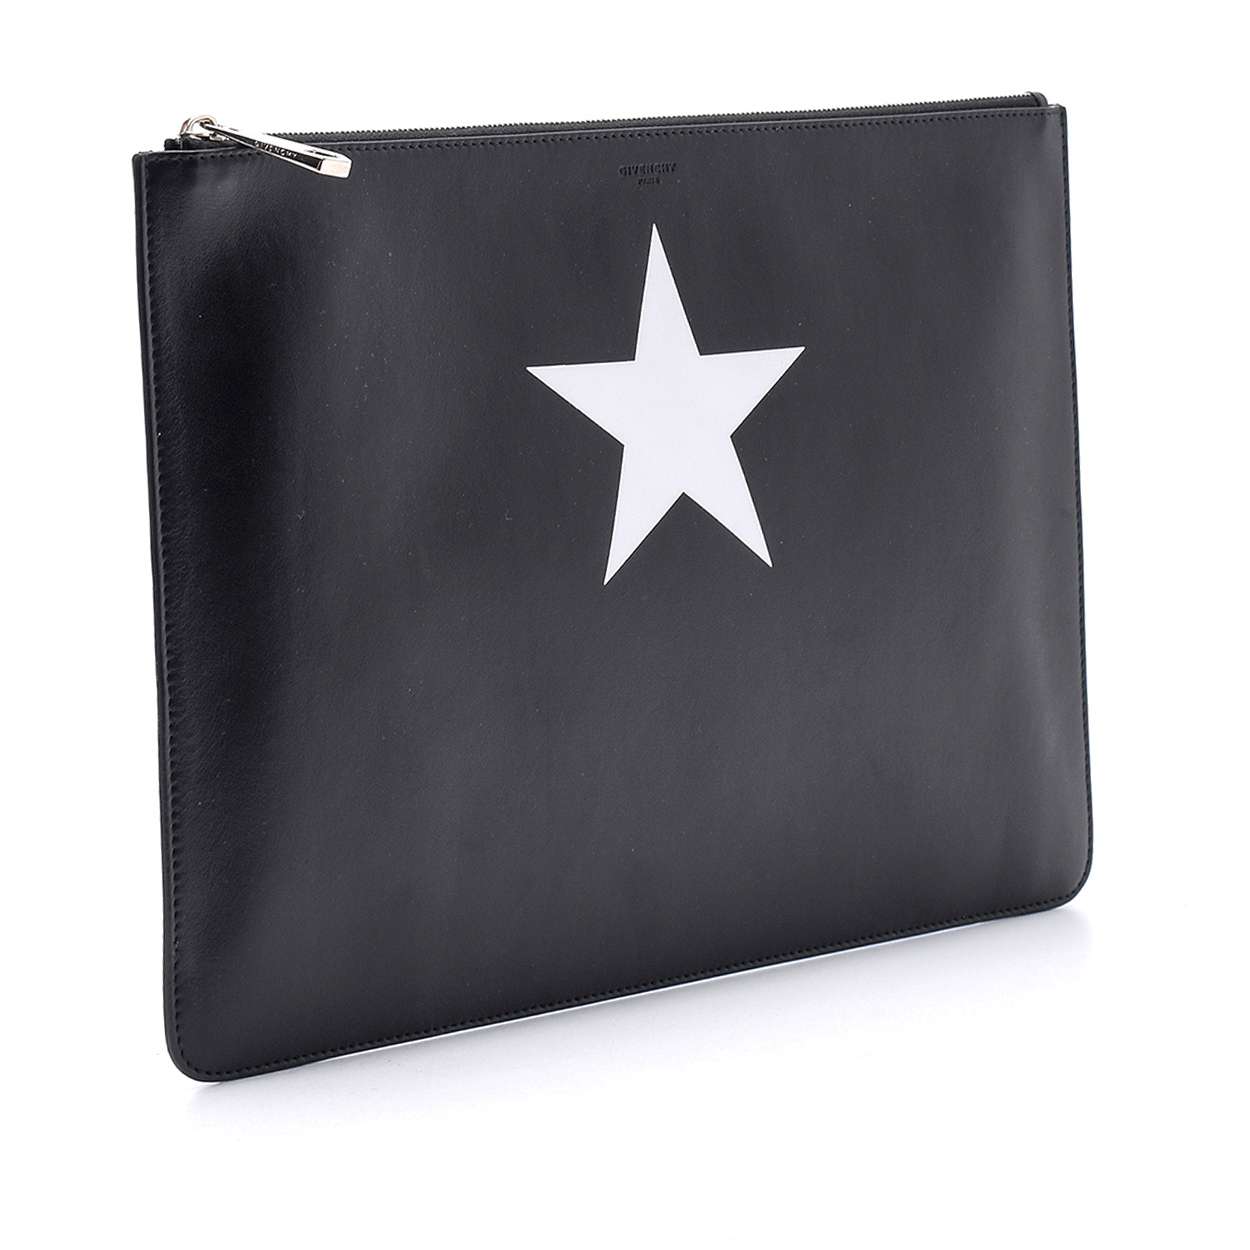 Givenchy - Black Star Print  Antigona  Leather Clutch